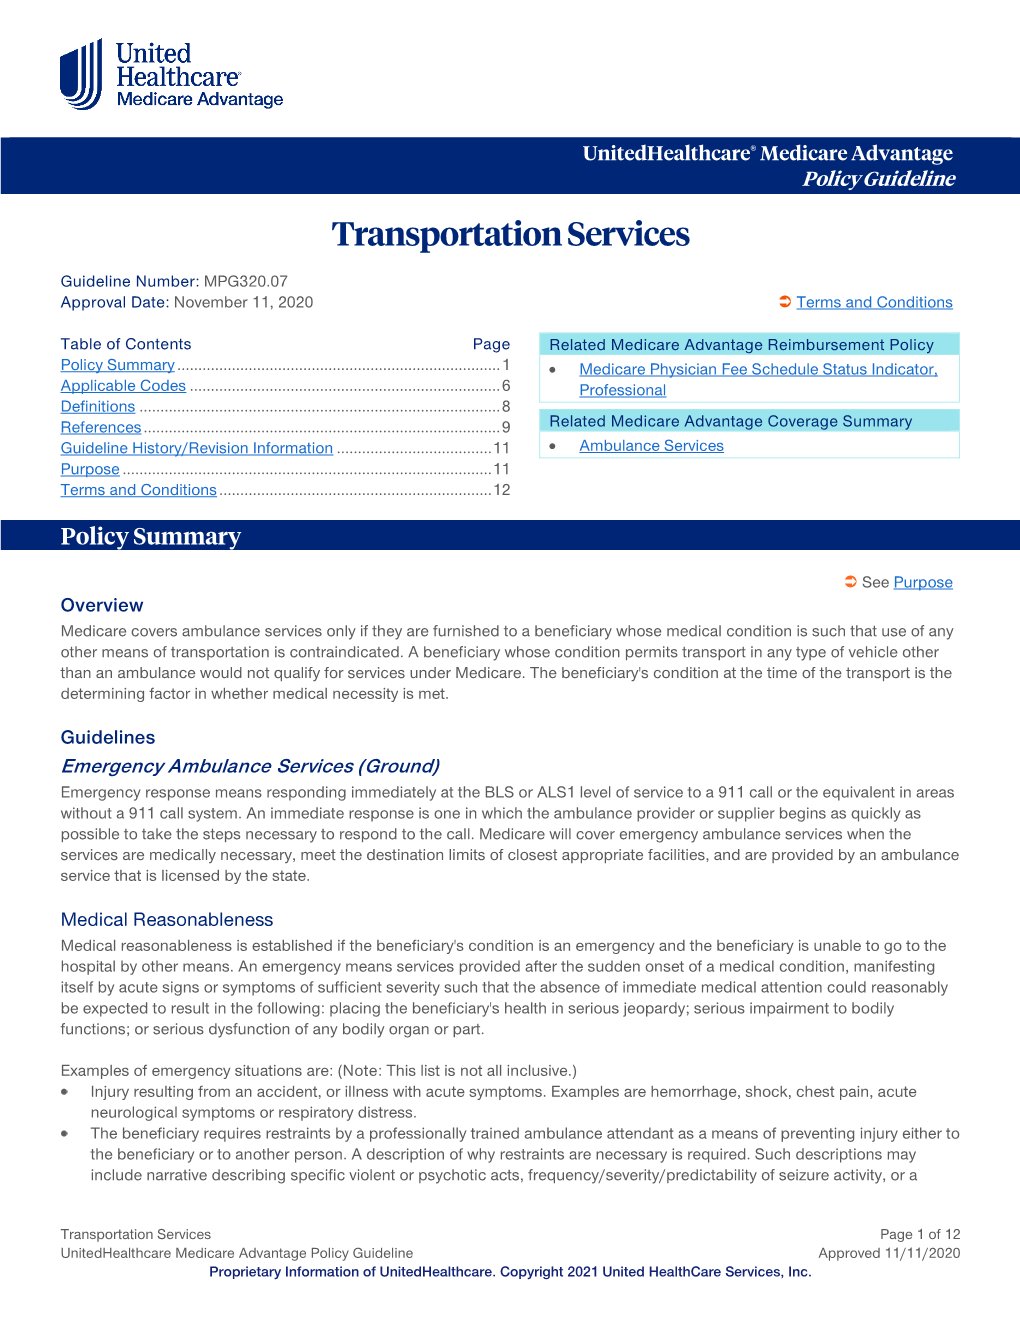 Transportation Services – Medicare Advantage Policy Guideline